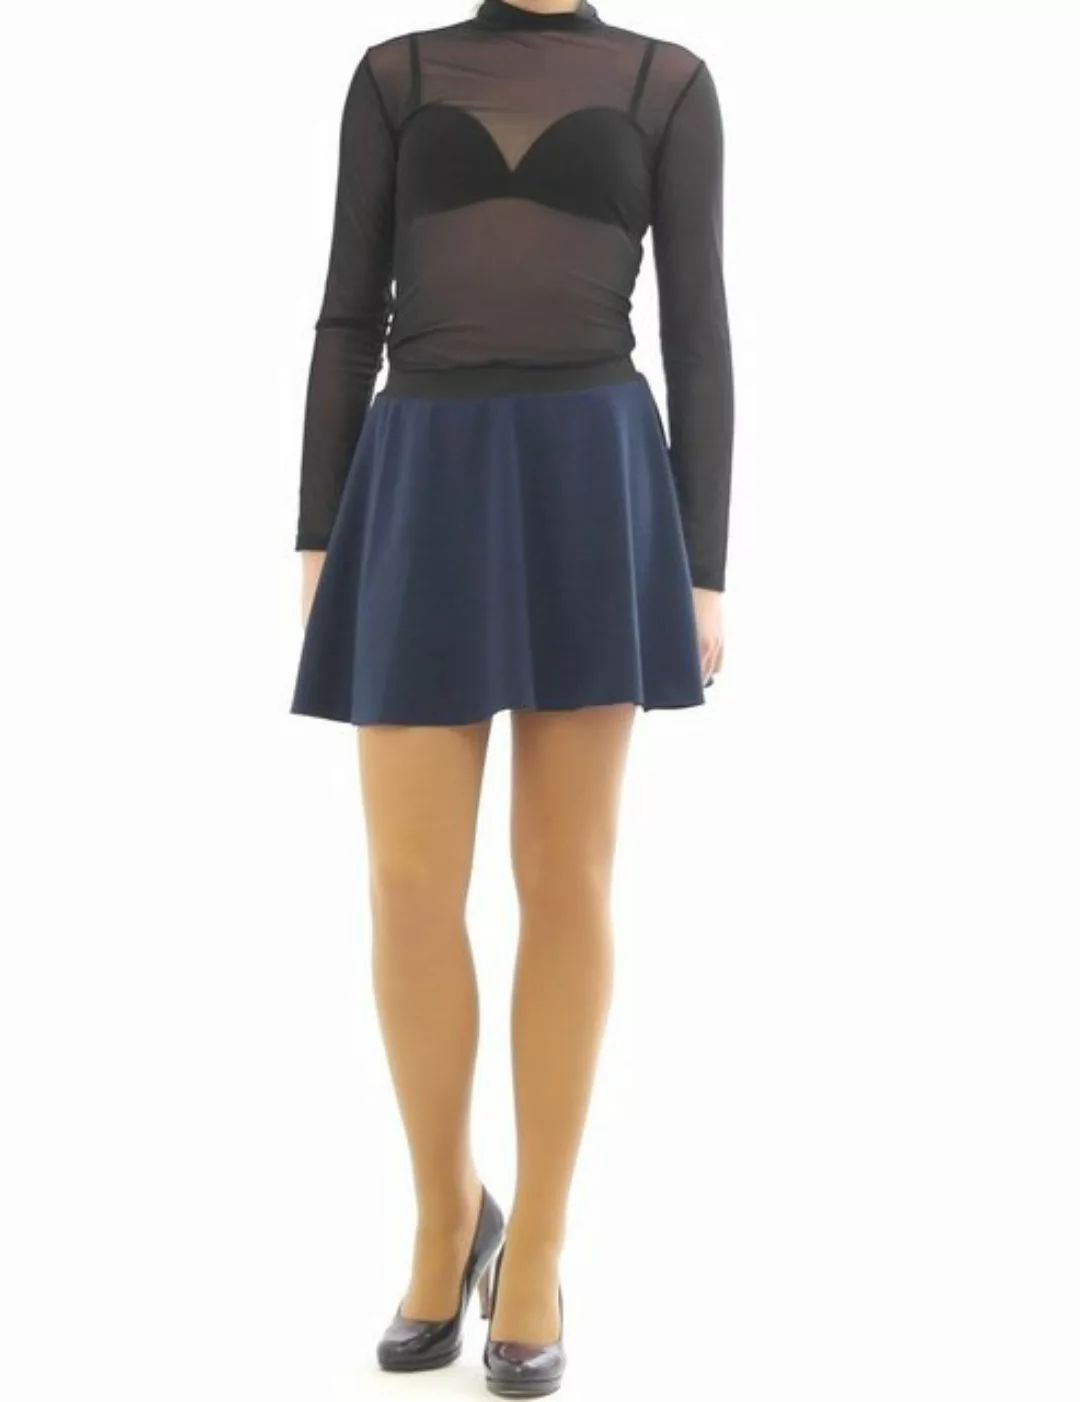 SYS Minirock Swing Rock Mini Falten-Rock Gummibund hohe Taille Skirt Miniro günstig online kaufen